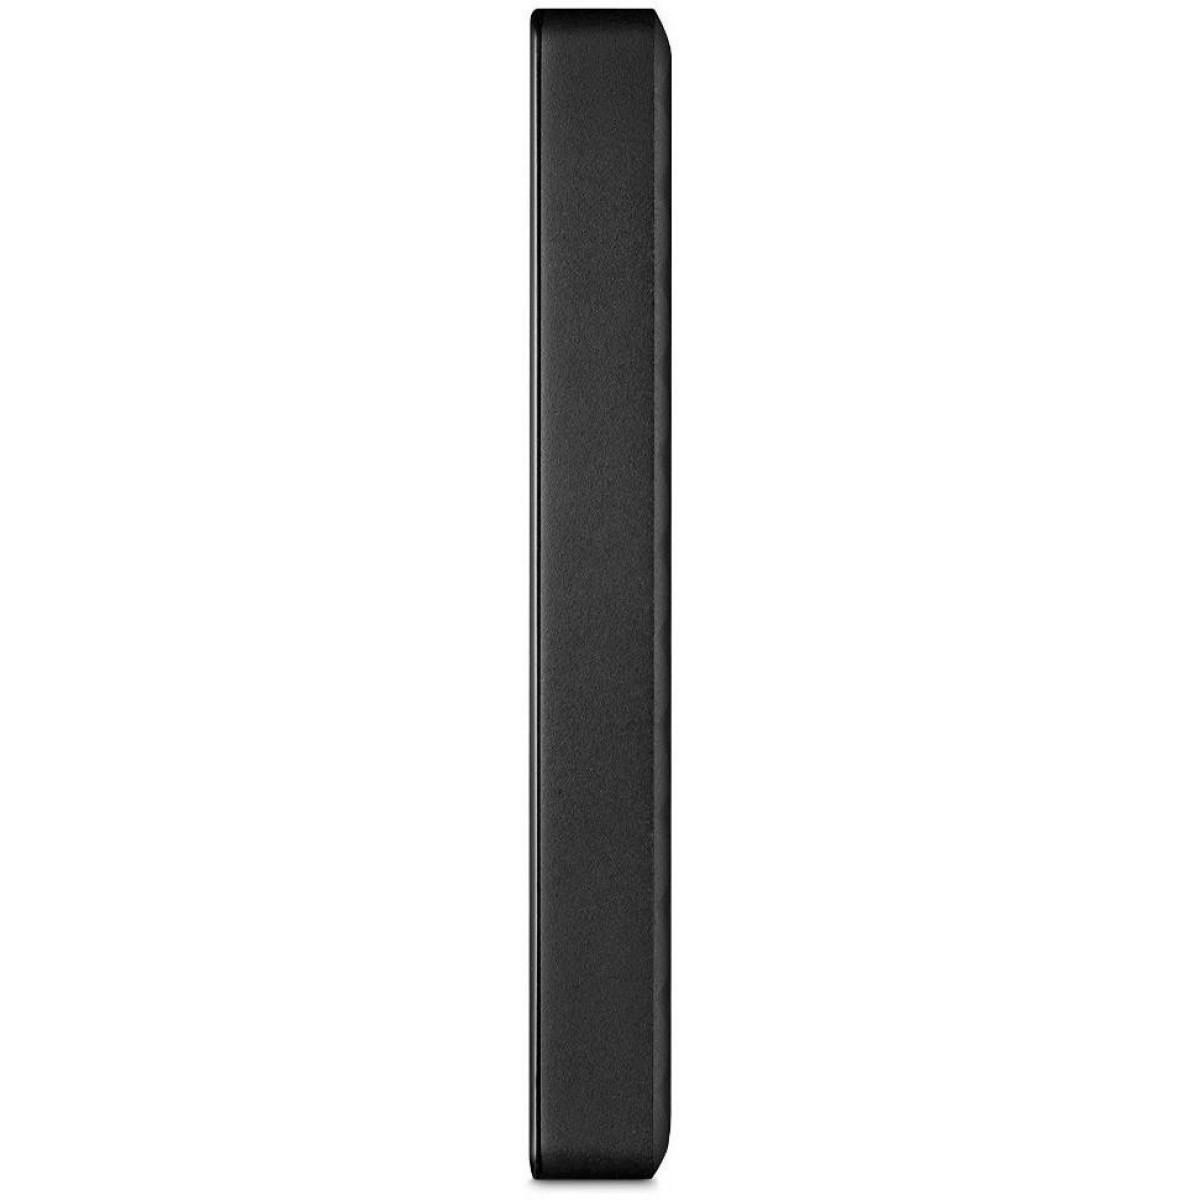 HD Externo Portátil Seagate Expansion 1TB, USB 3.0, Black, STEA1000400